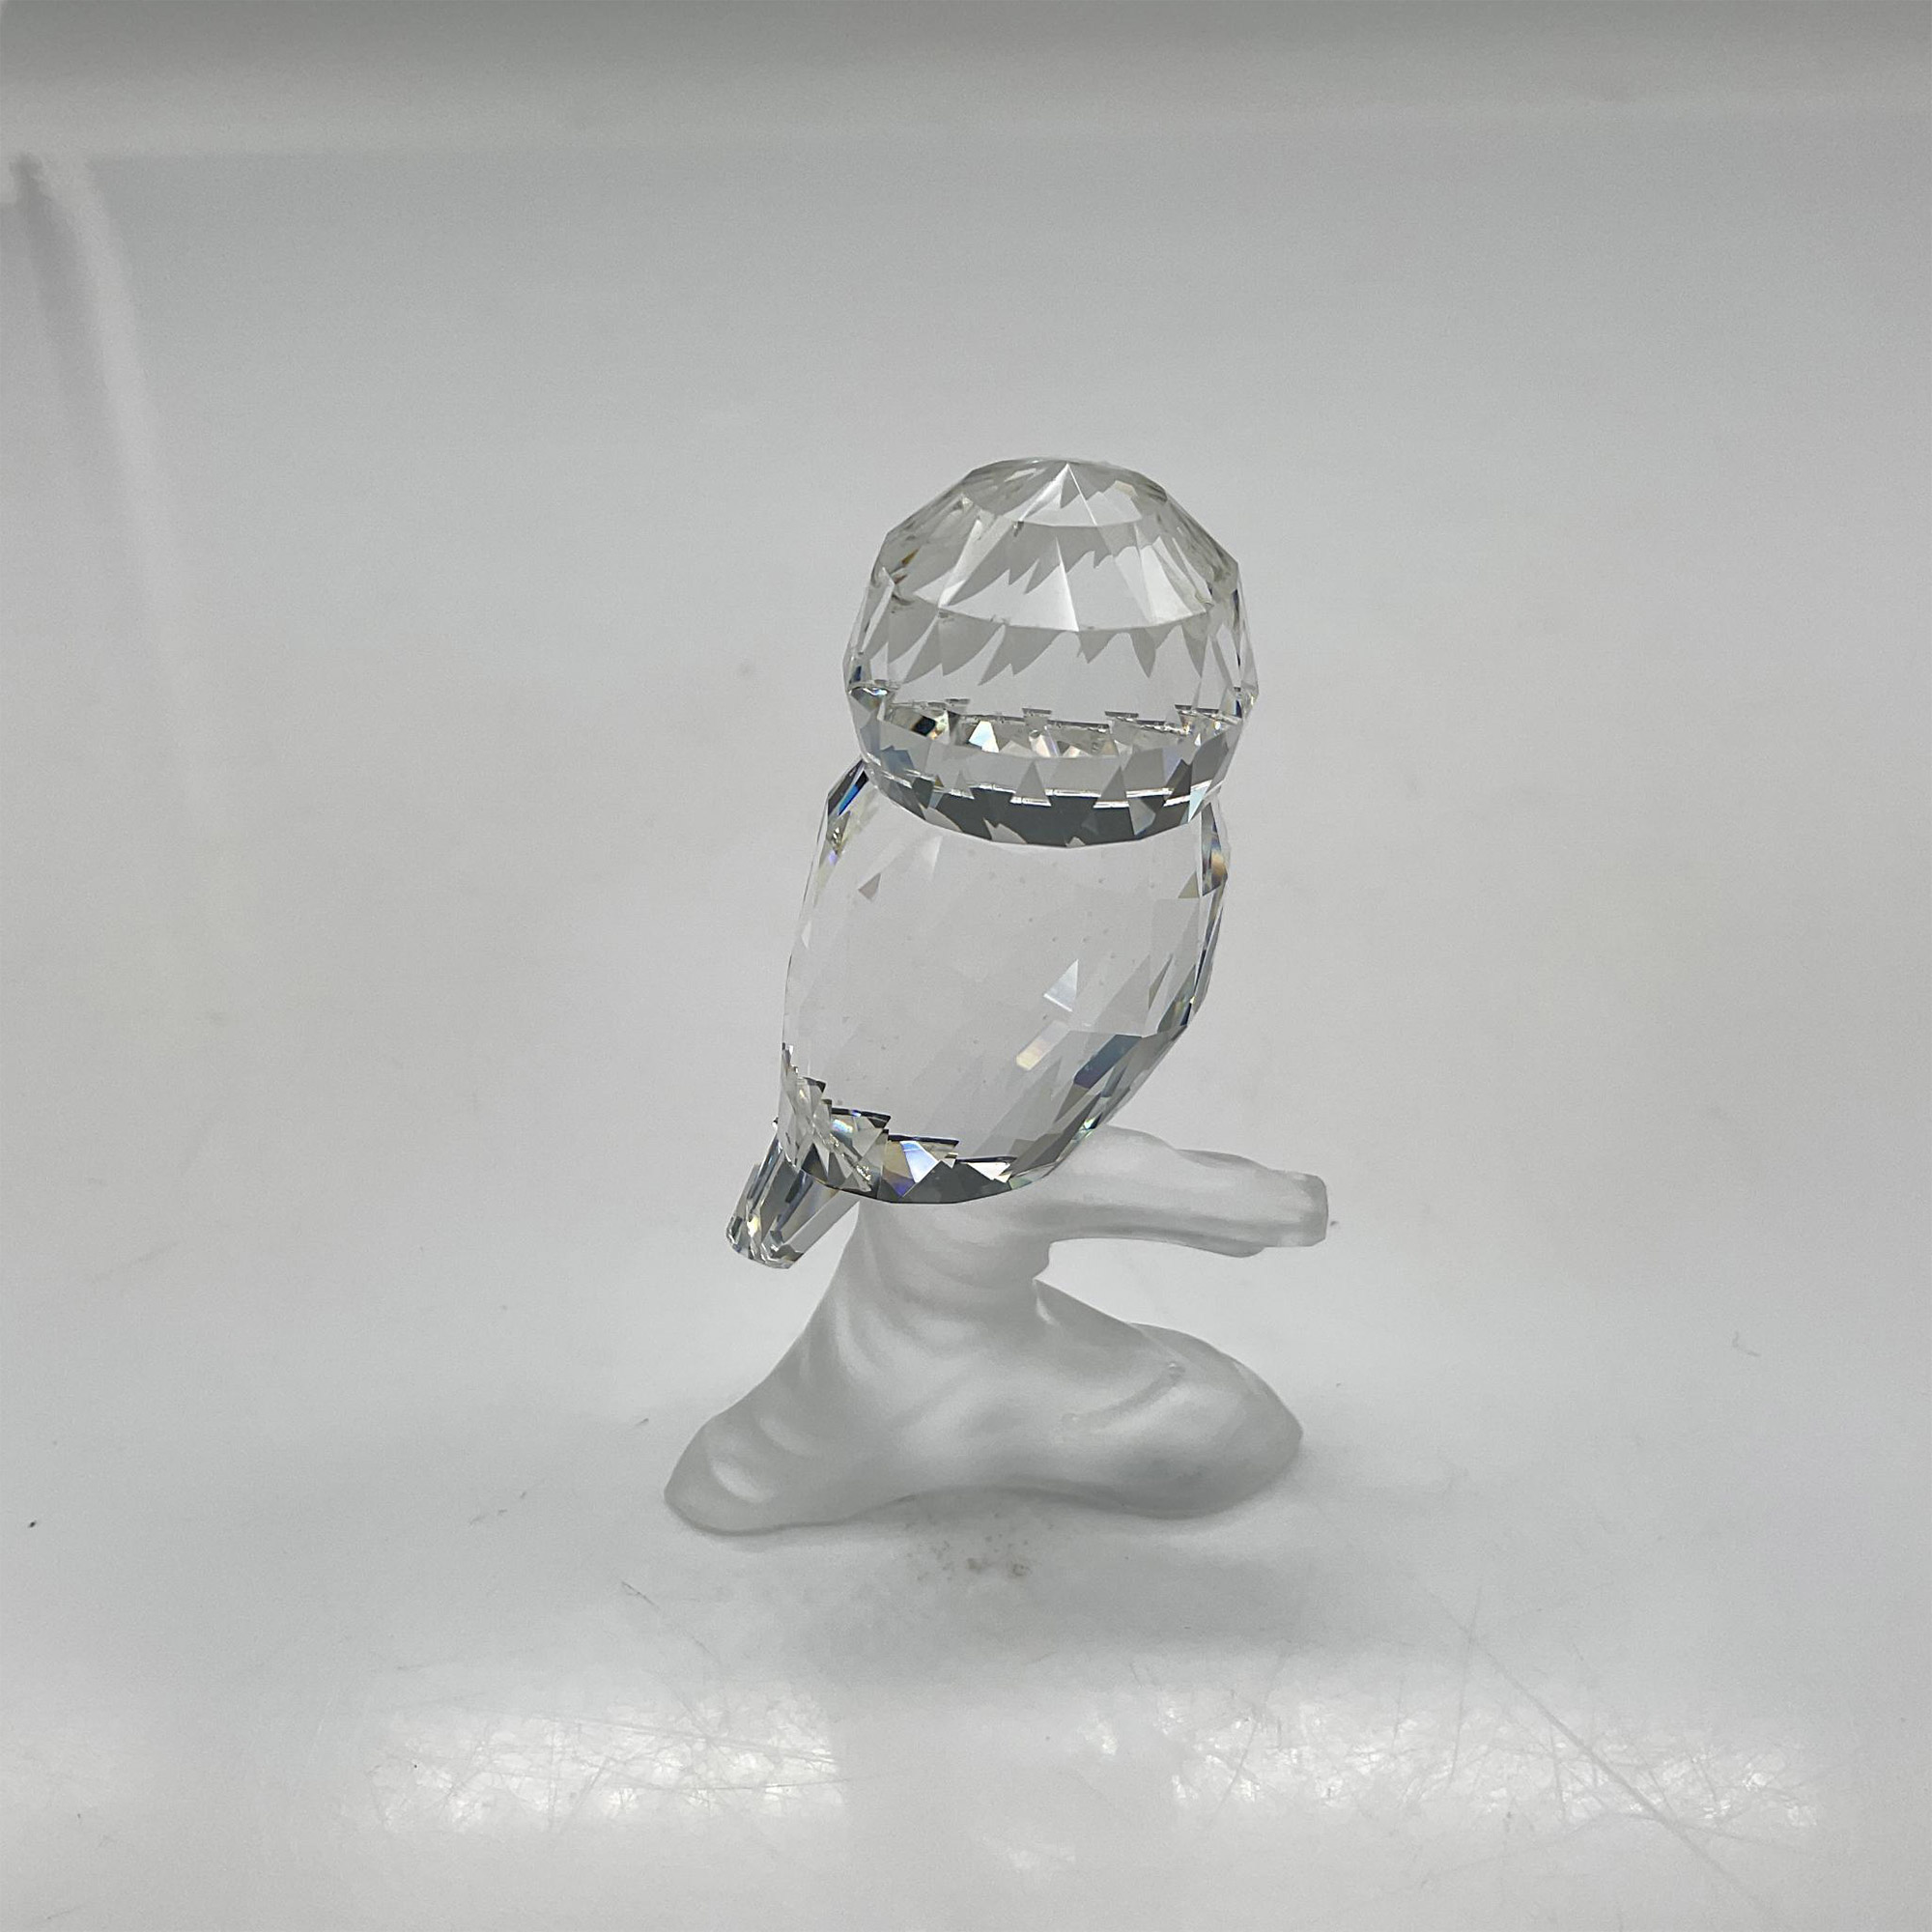 Swarovski Silver Crystal Figurine, Owl on Branch - Image 2 of 4